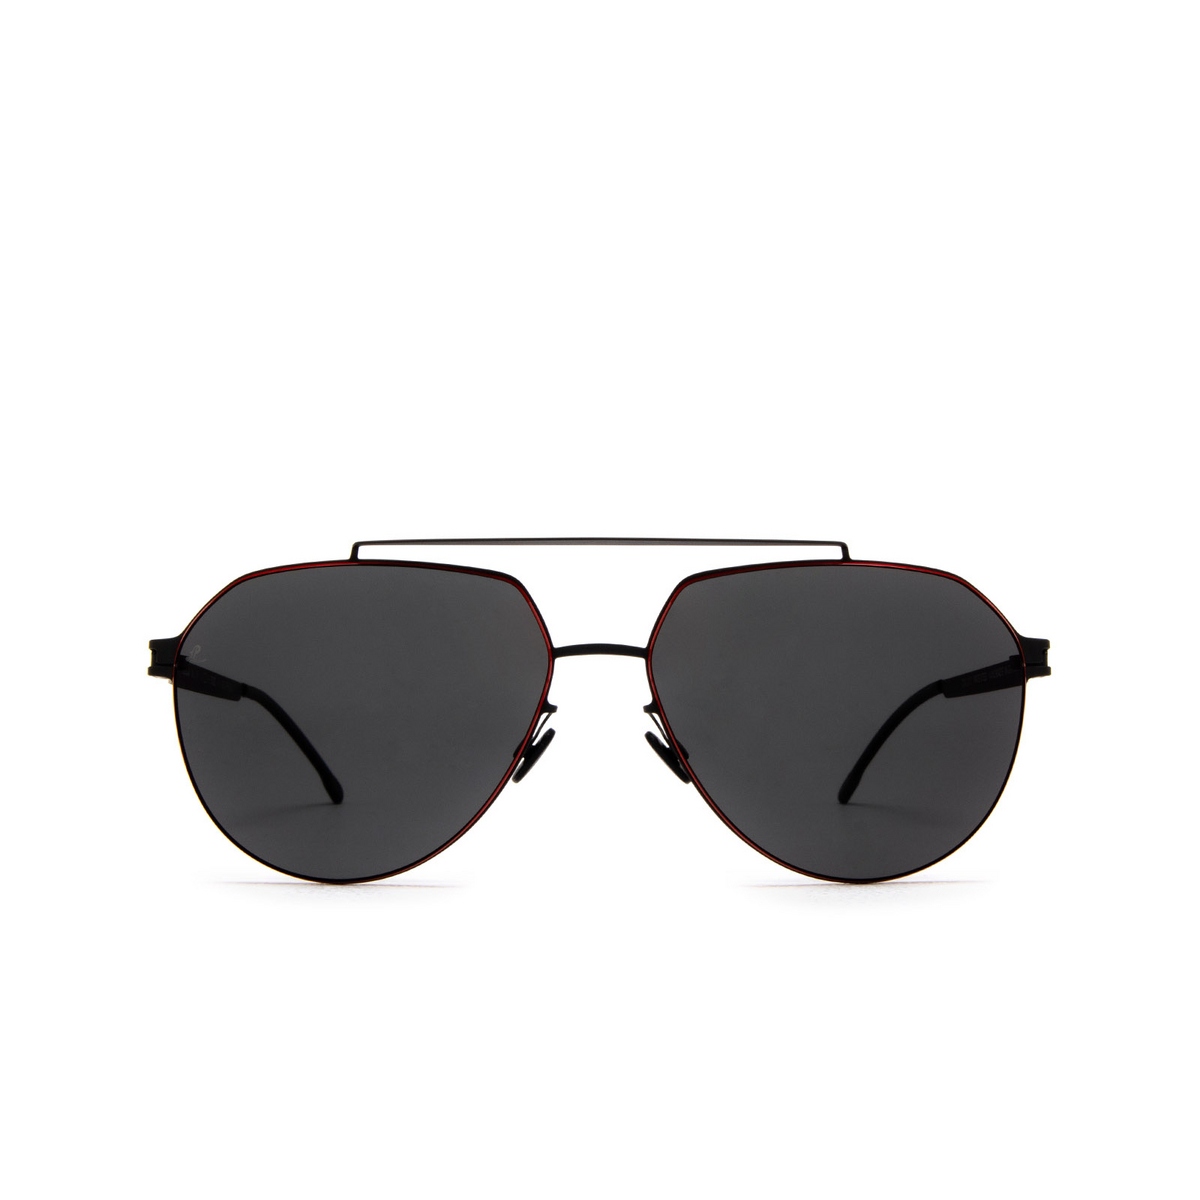 Mykita ML13 Sunglasses 002 Black - front view